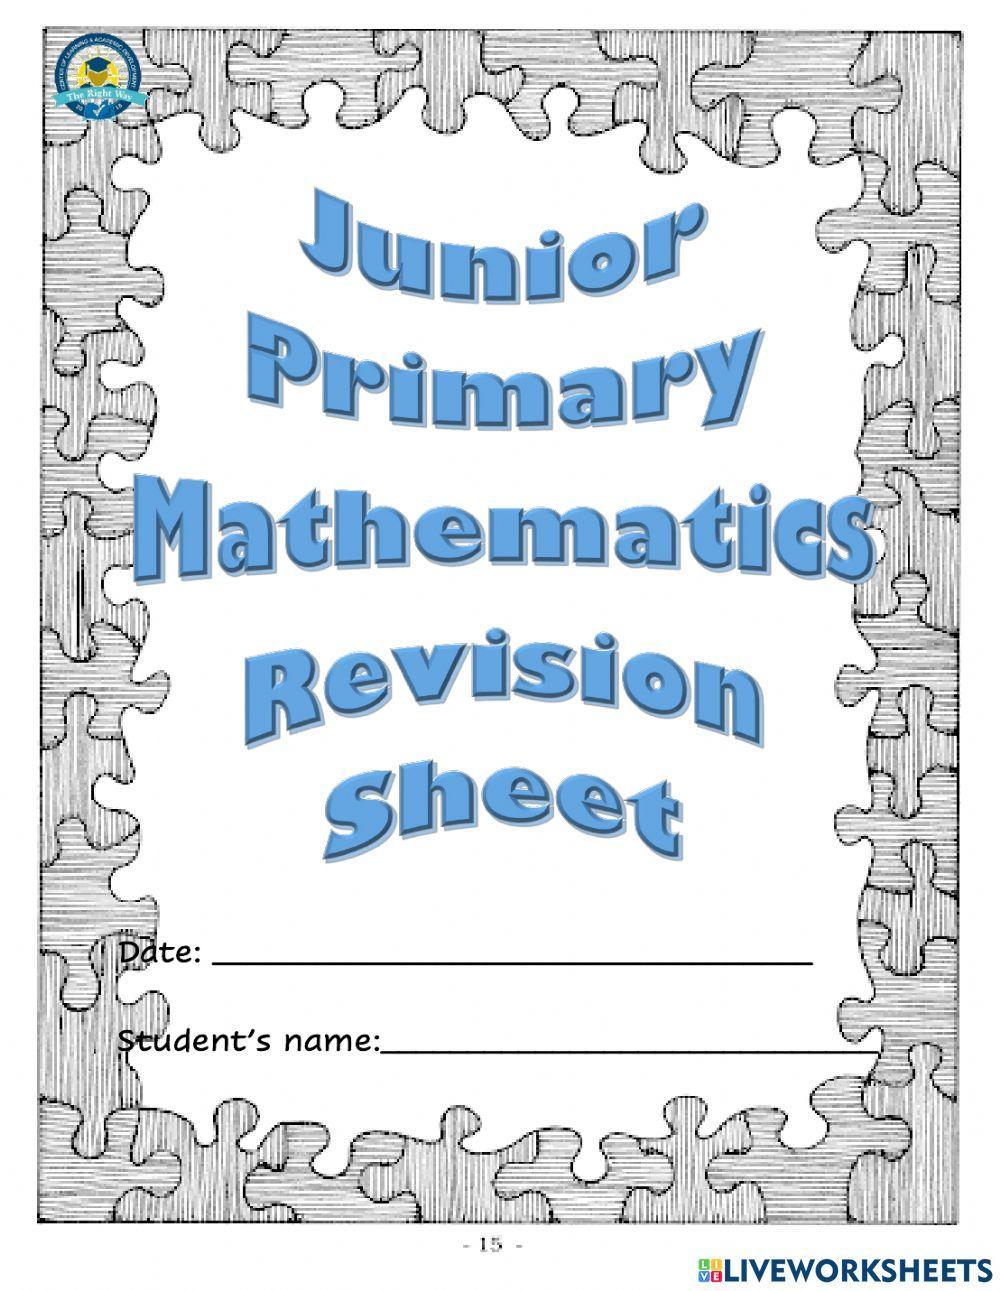 Mathematics Revision Sheet-1